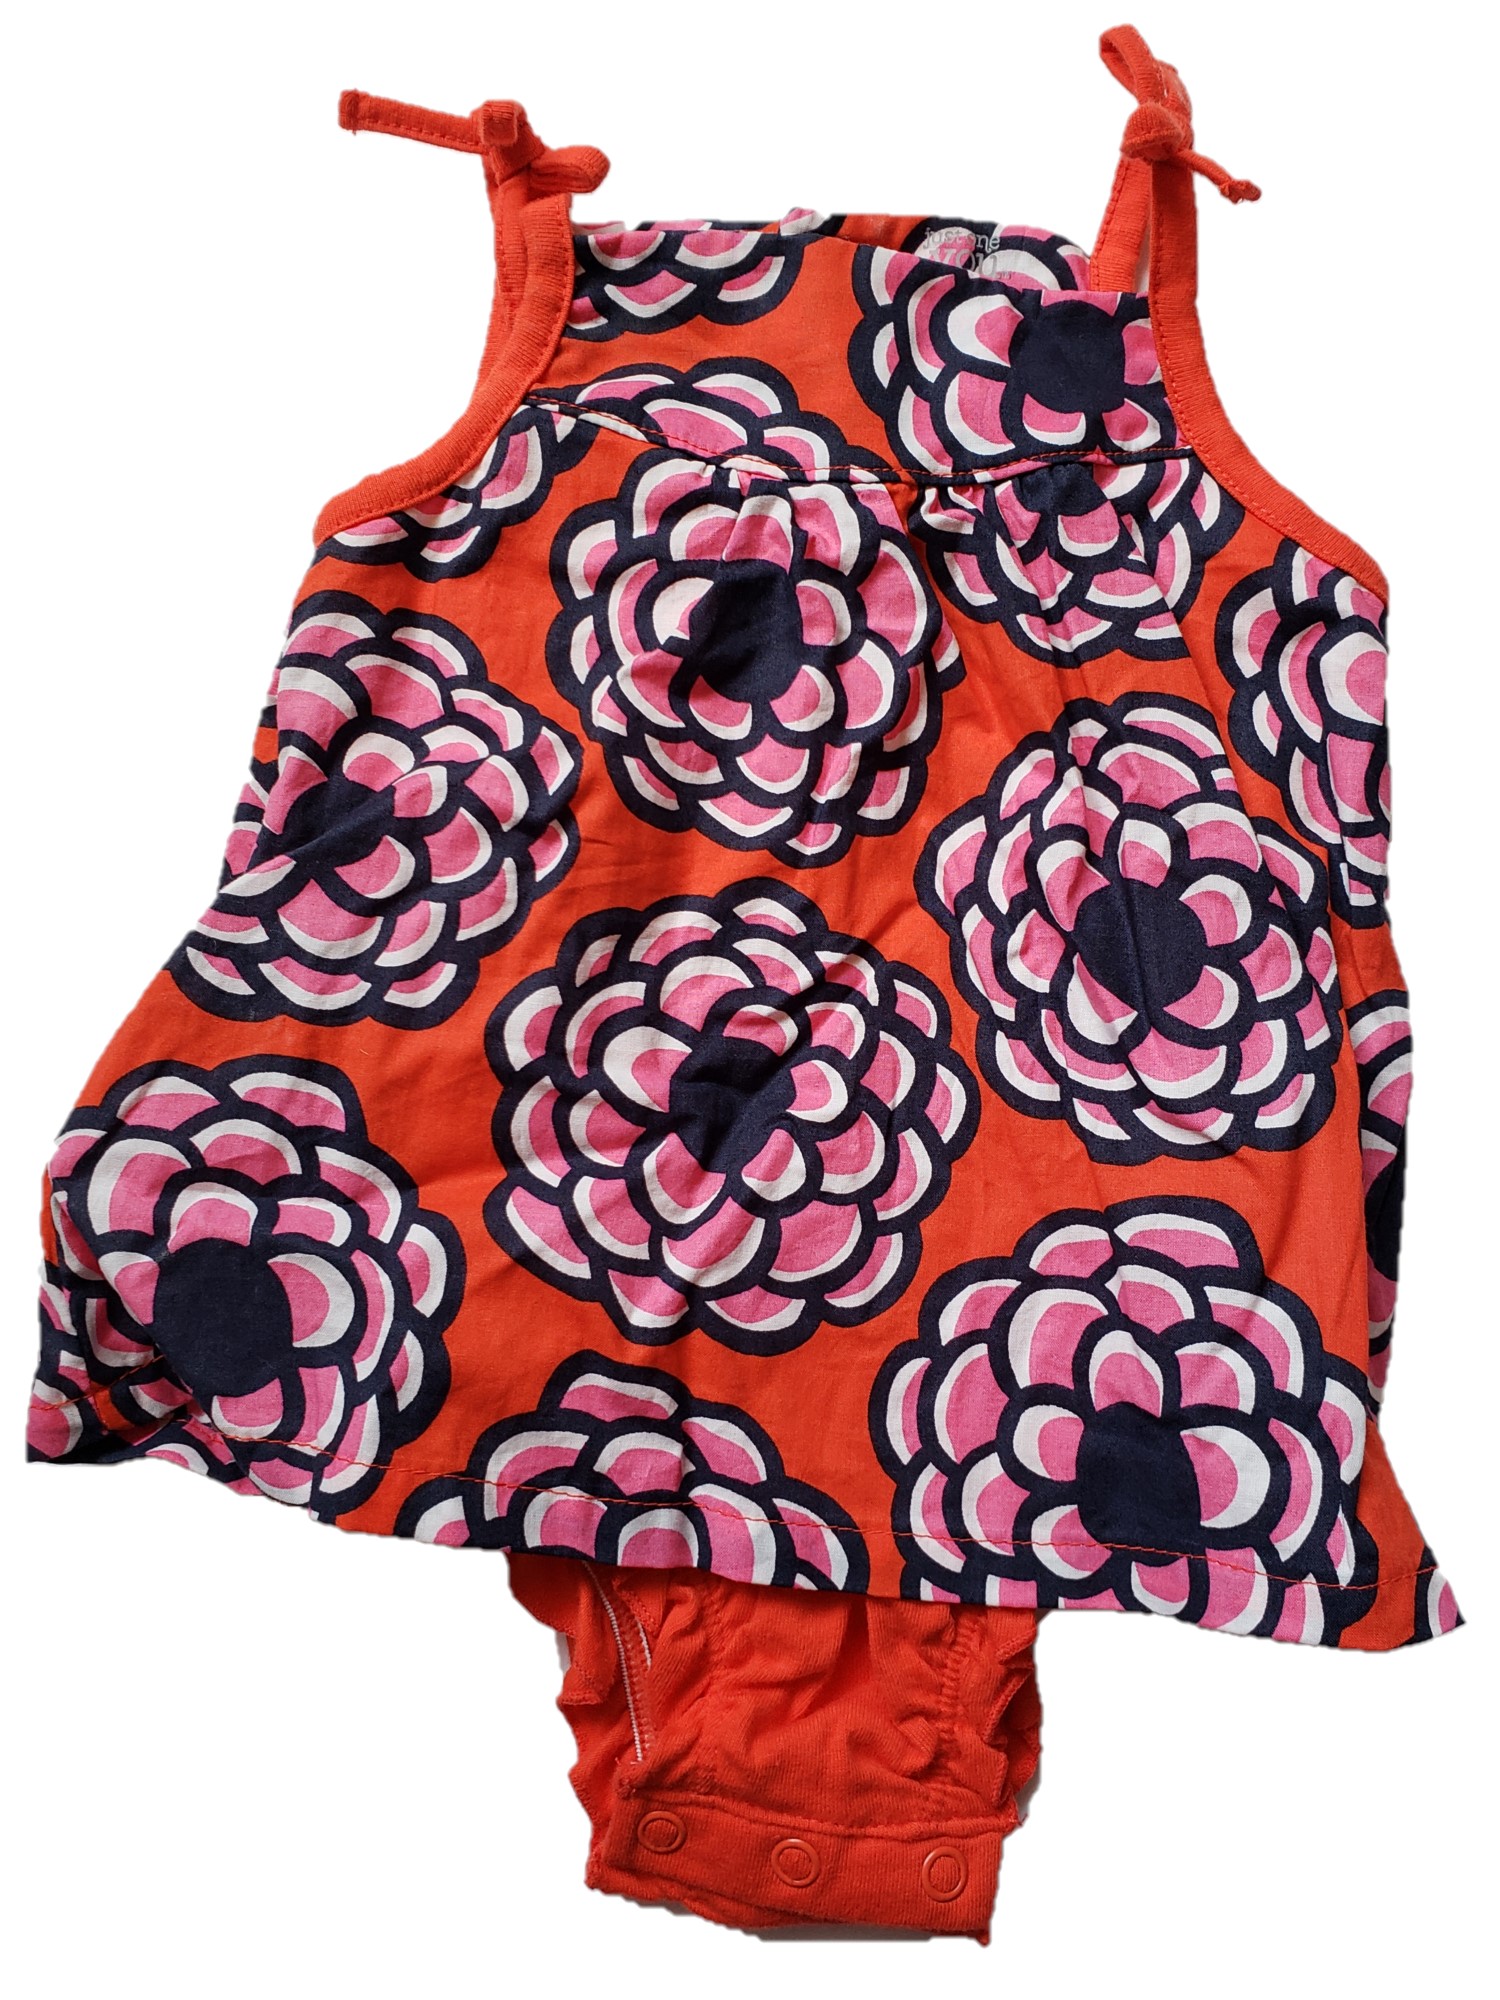 Carter's Infant Baby Girls Orange & Pink Flower Print Cotton Summer Romper Bodysuit